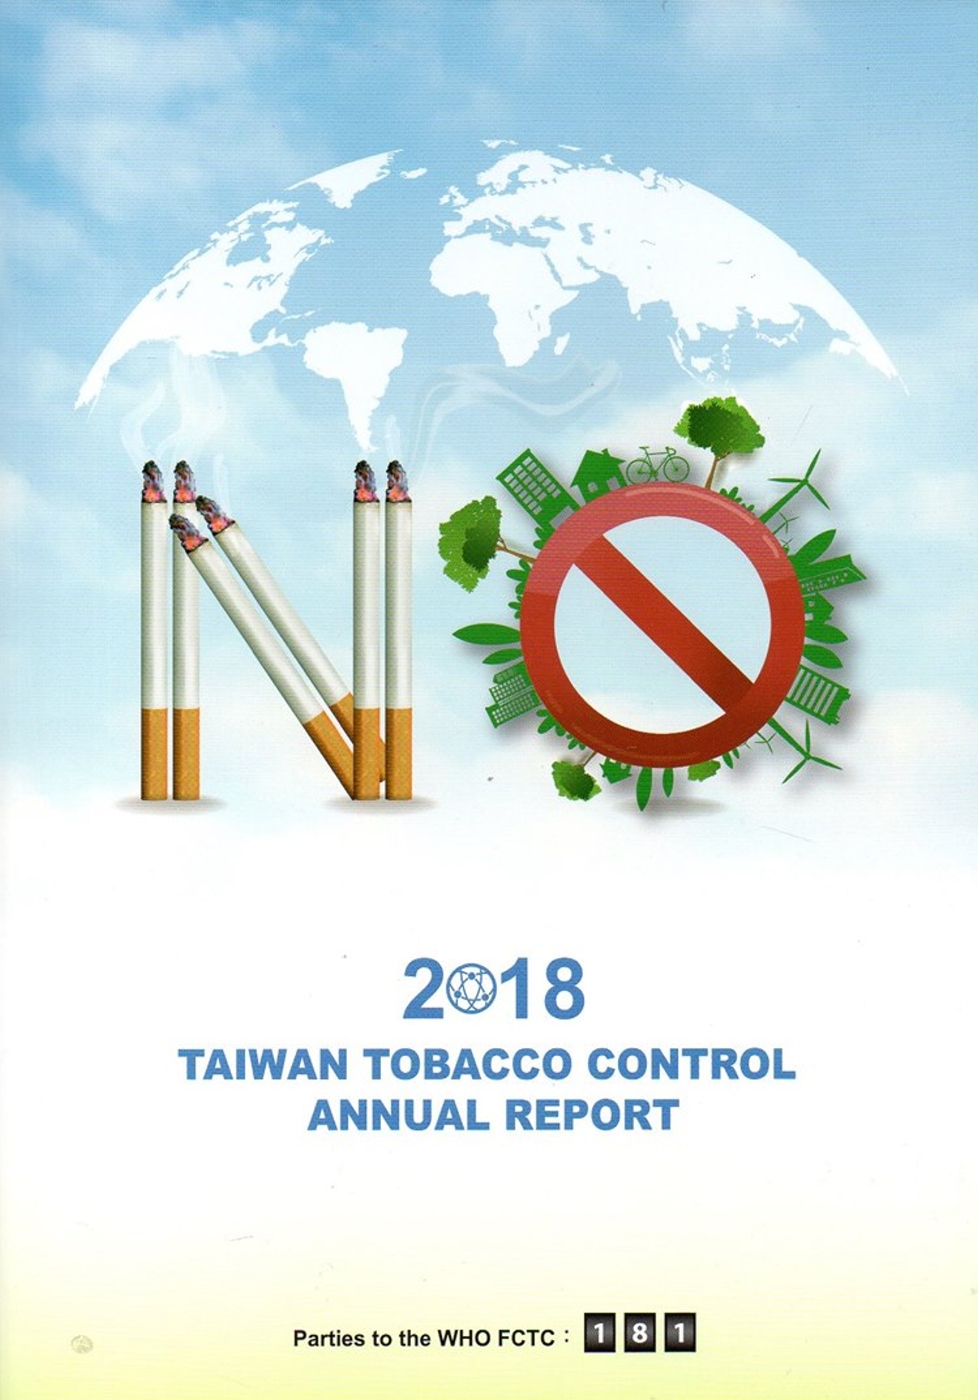 2018年臺灣菸害防制年報 英文版(TAIWAN TOBACCO CONTROL  ANNUAL REPORT 2018)